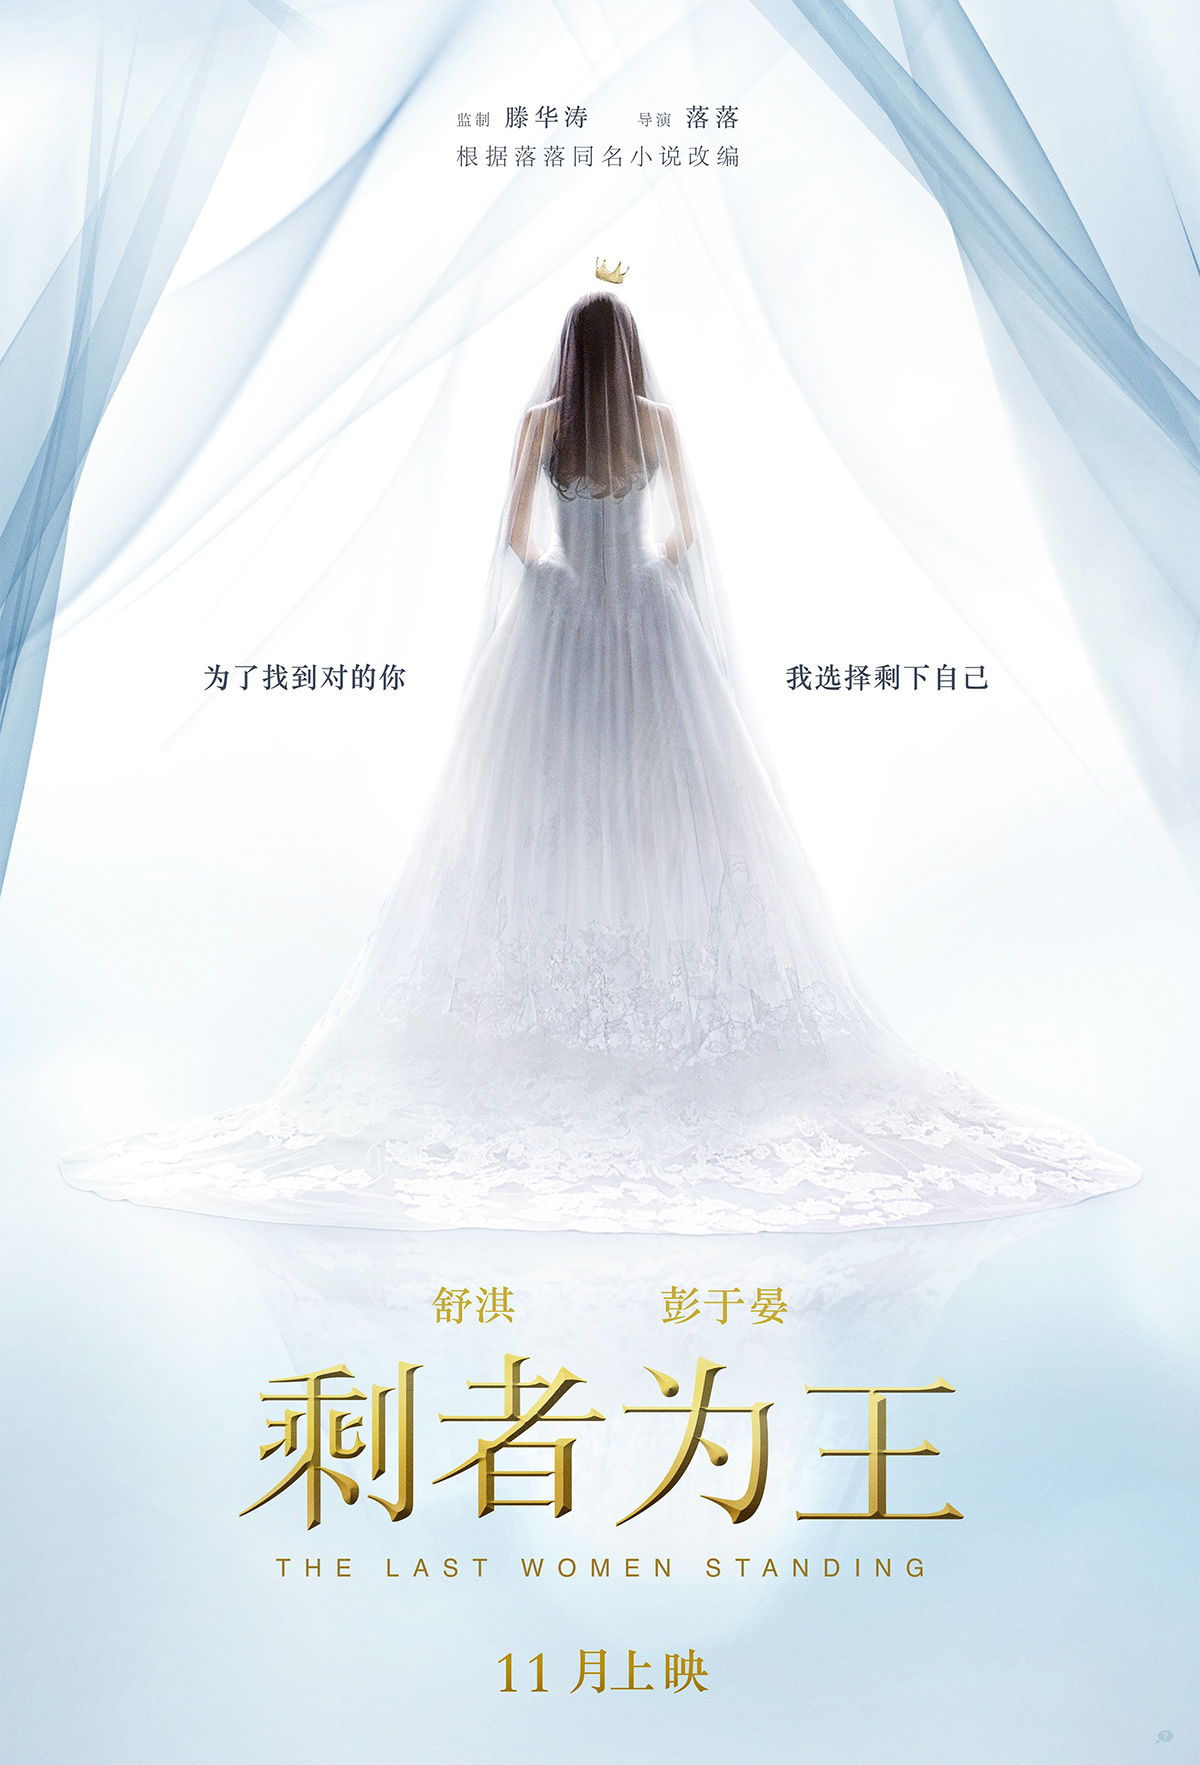 movie poster romance Romantic poster eddie peng movie poster Office Shu Qi wedding